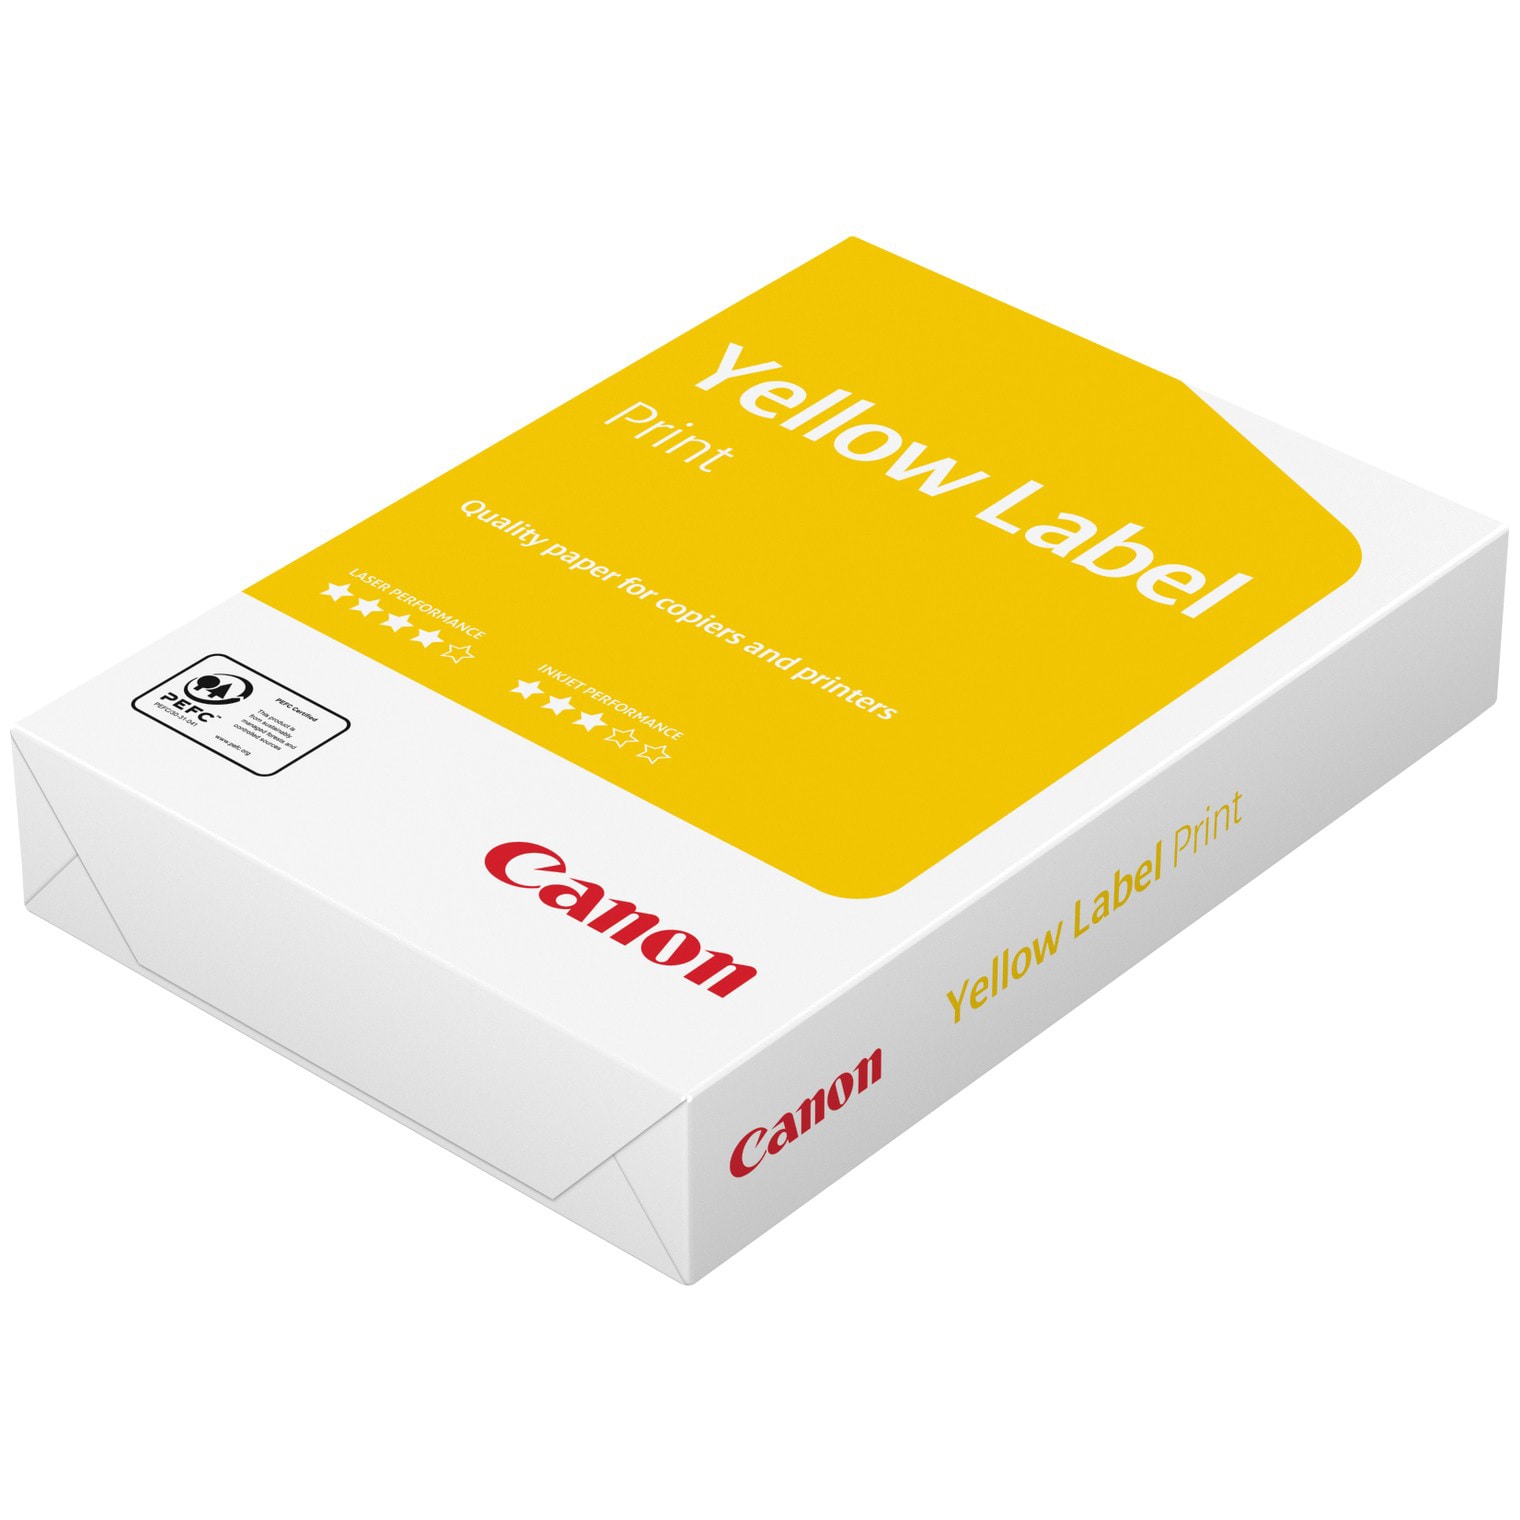 Canon printerpapir Yellow Label A4 - 500 ark - Printerpapir og ...